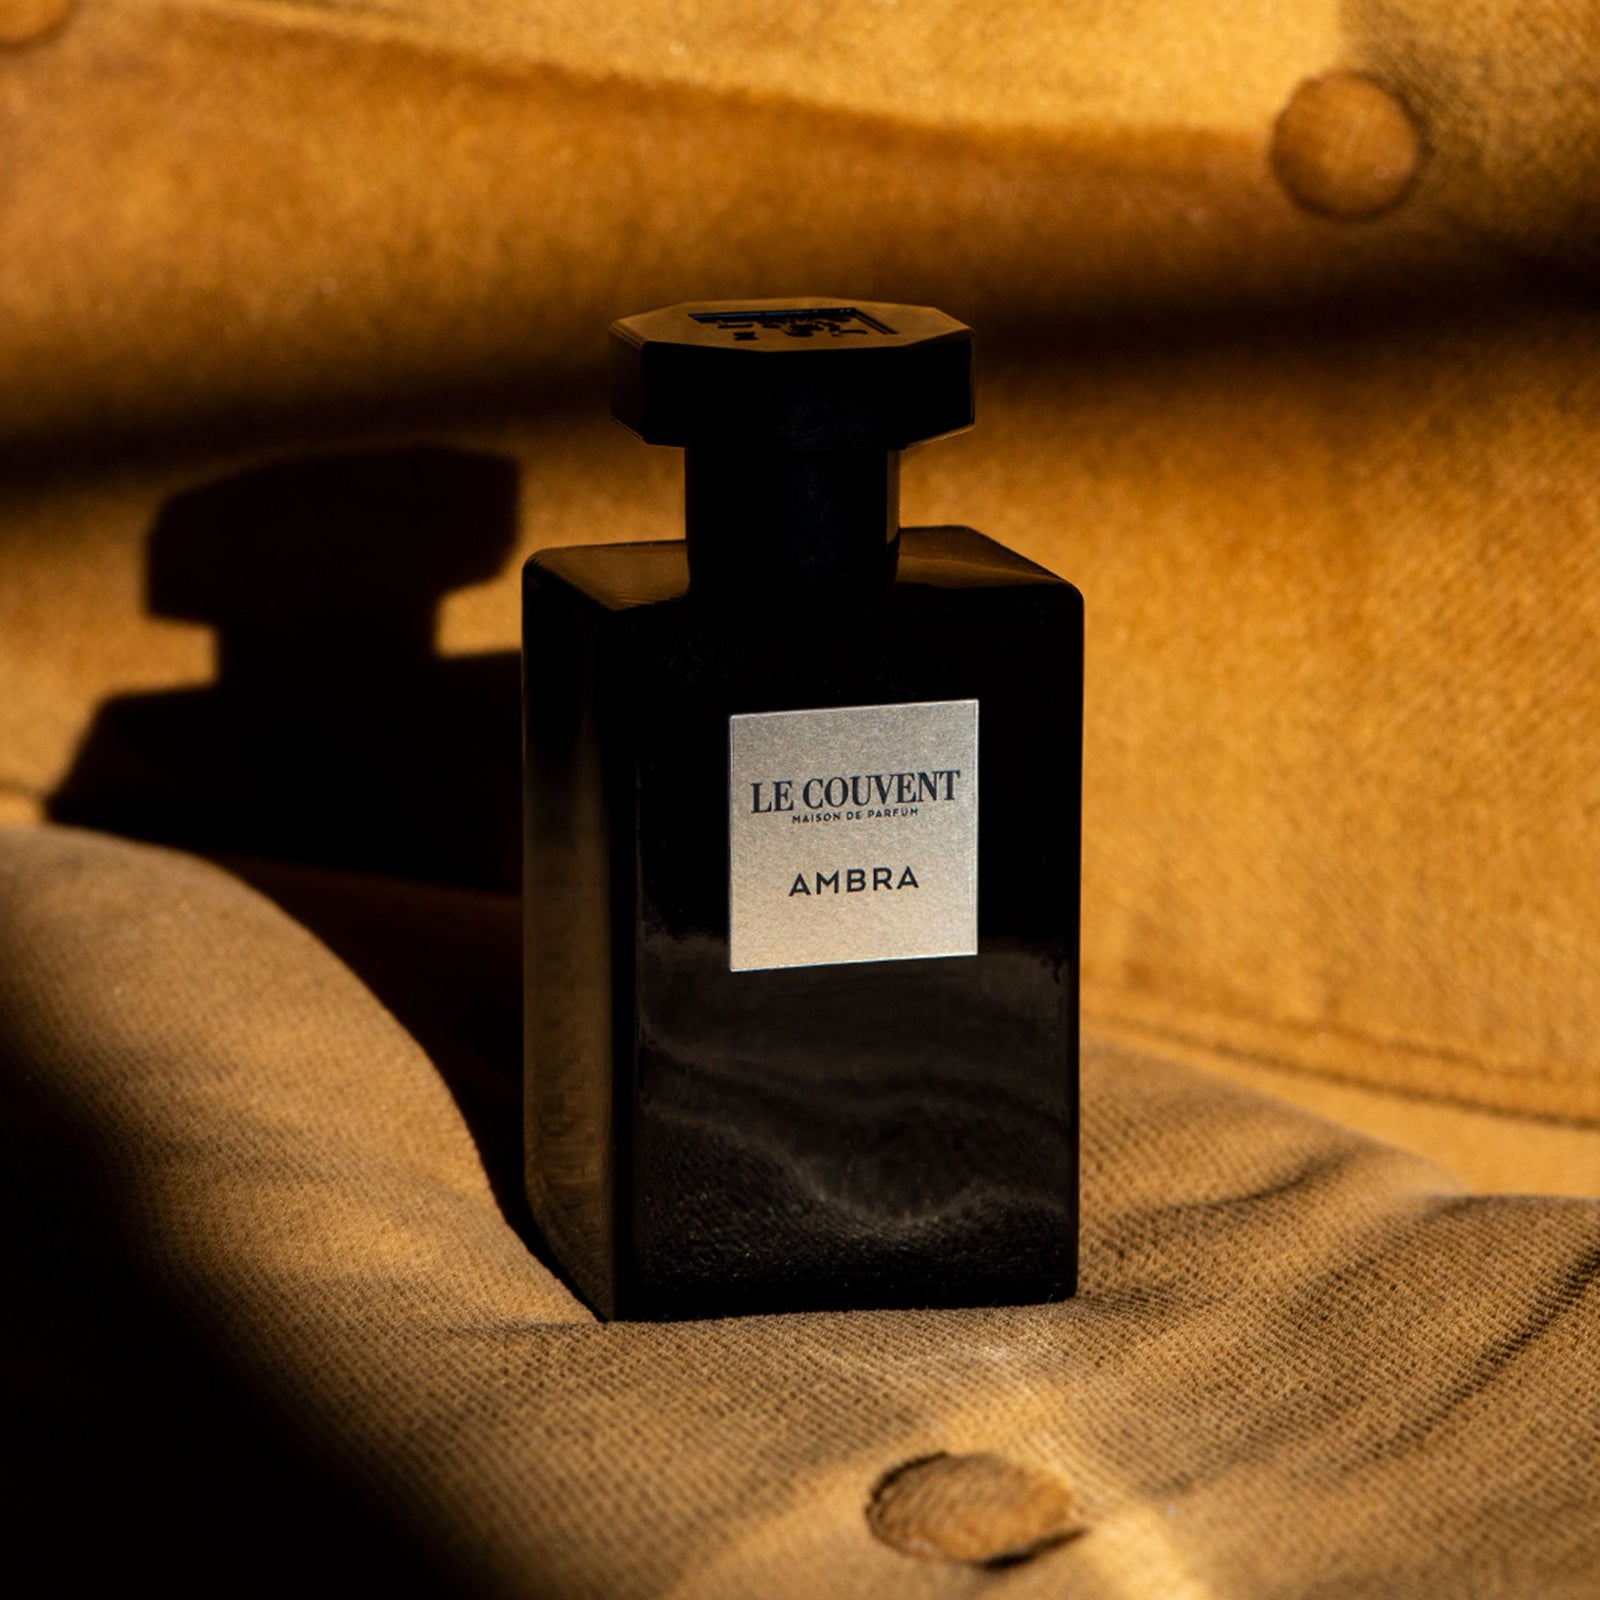 LOUIS FEUILLEE SINGULAR HOME FRAGRANCE Perfume - LOUIS FEUILLEE SINGULAR  HOME FRAGRANCE by Le Couvent